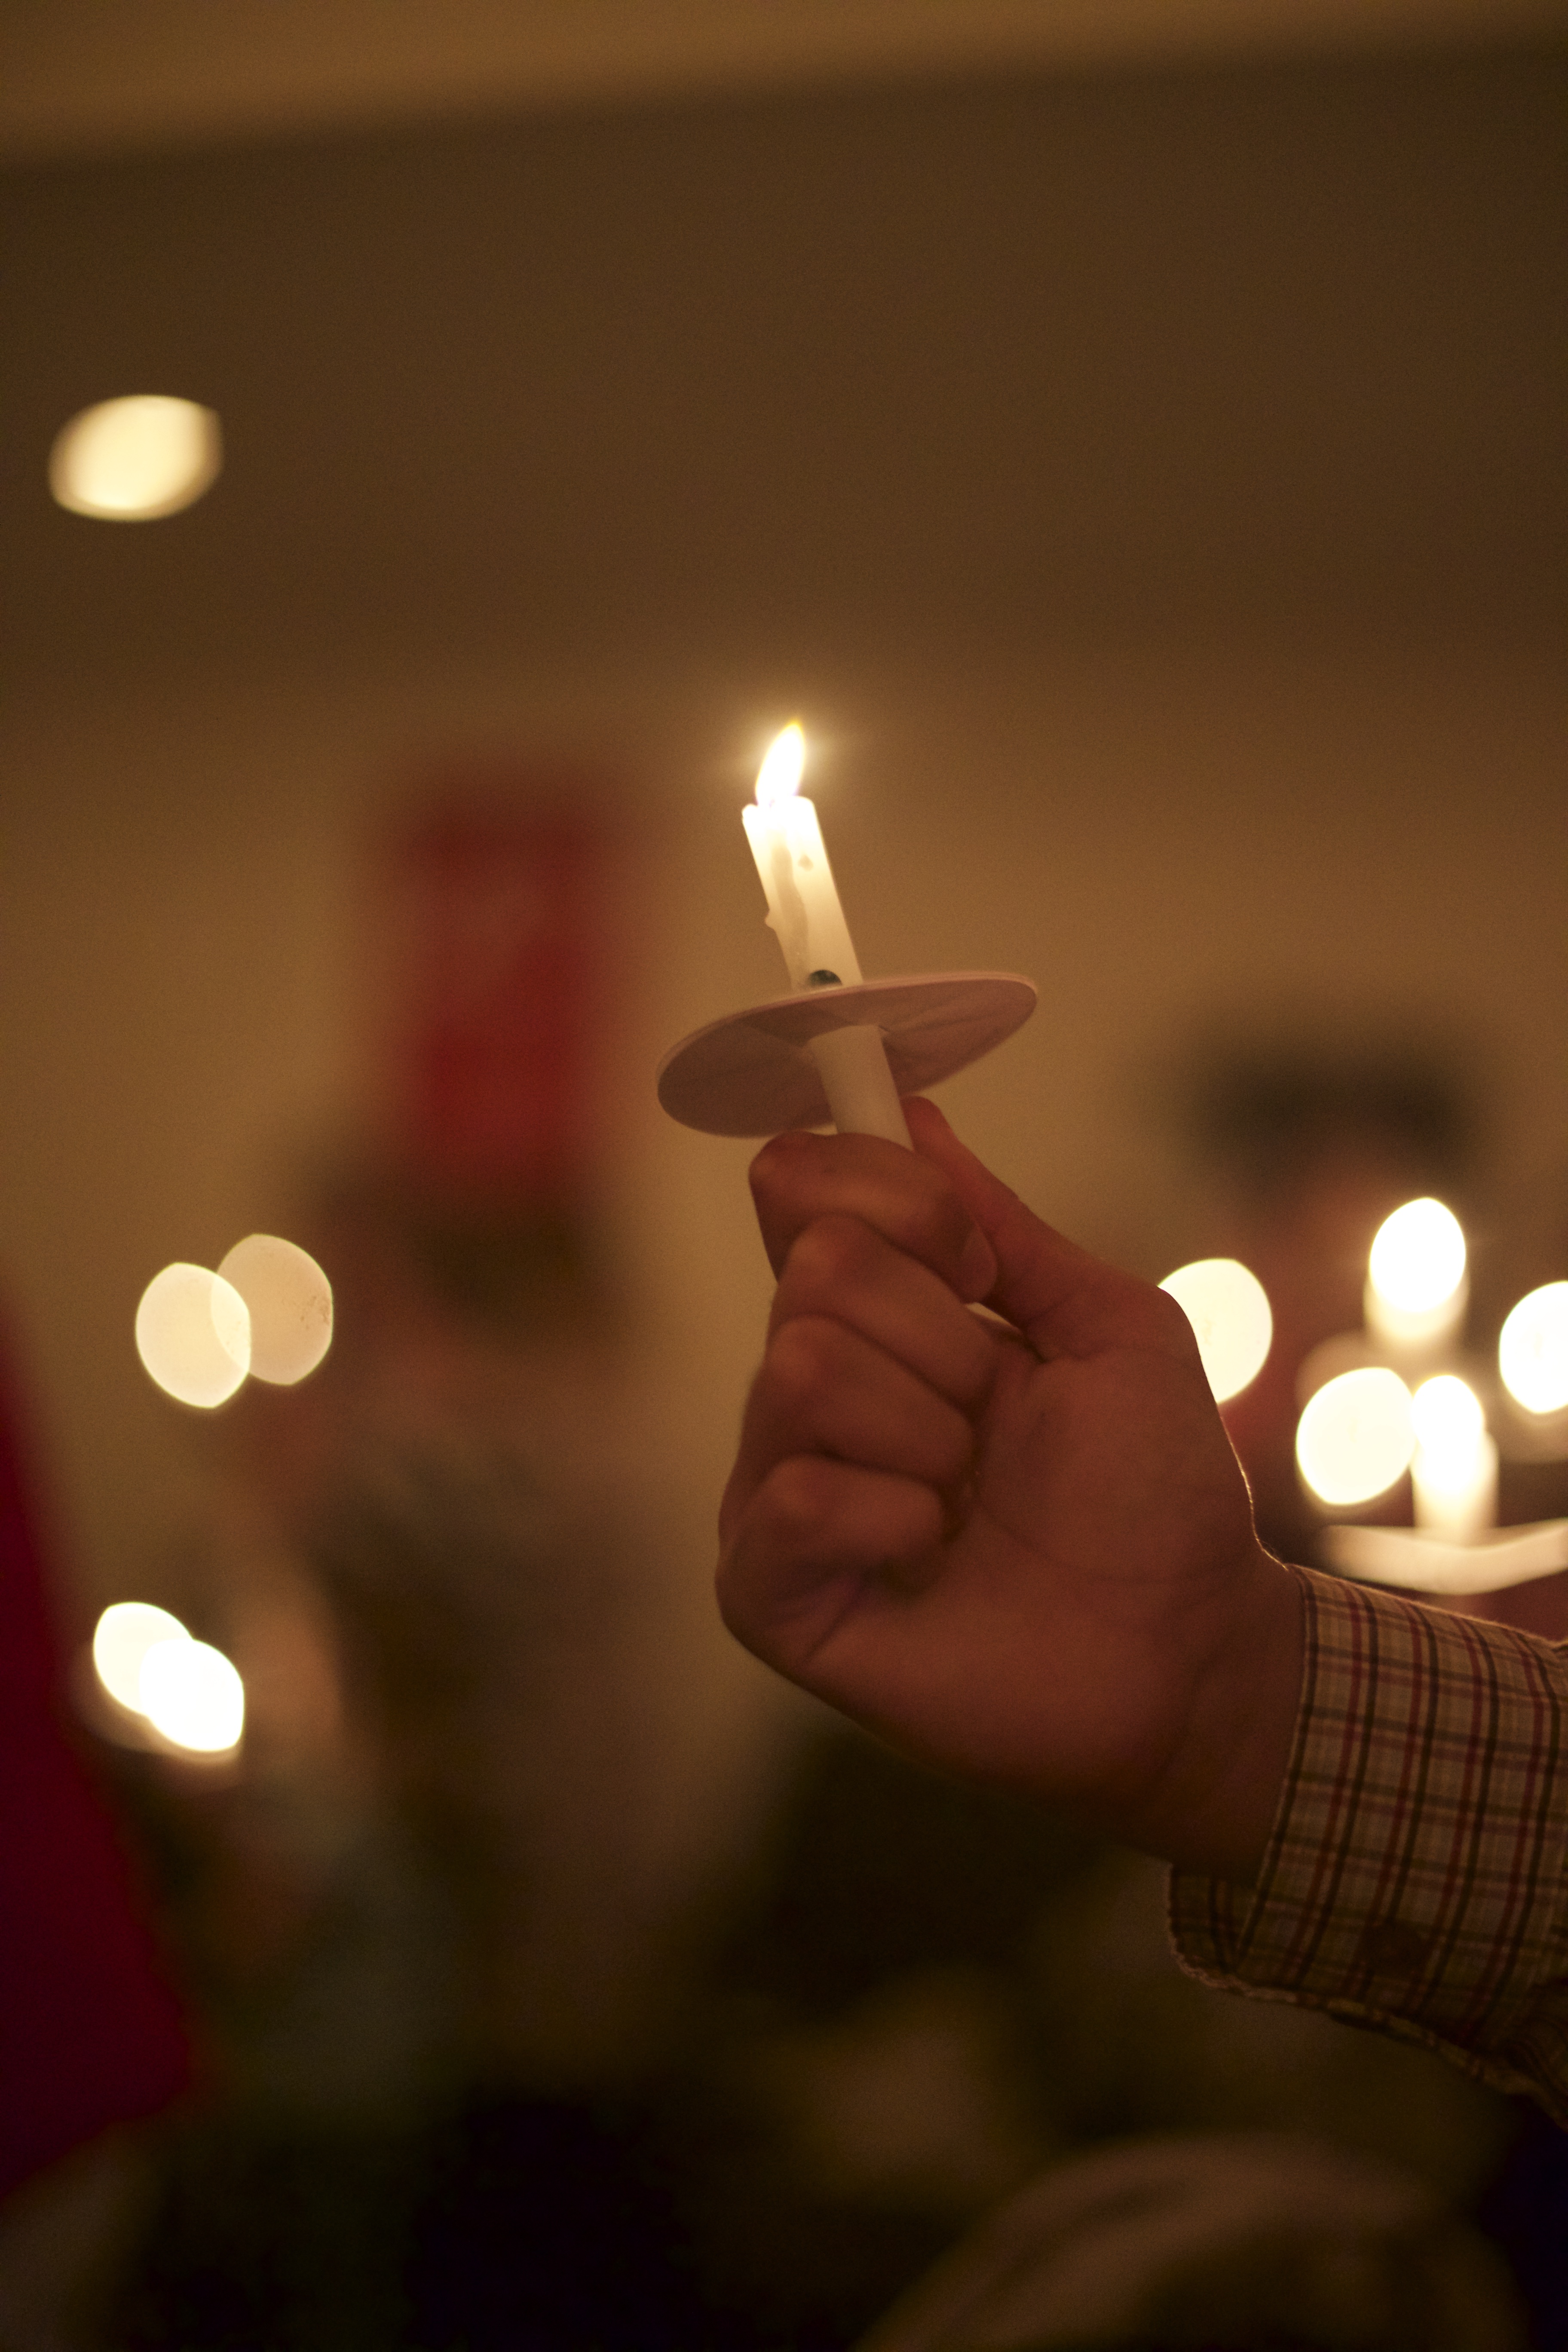 christmas eve candlelight service